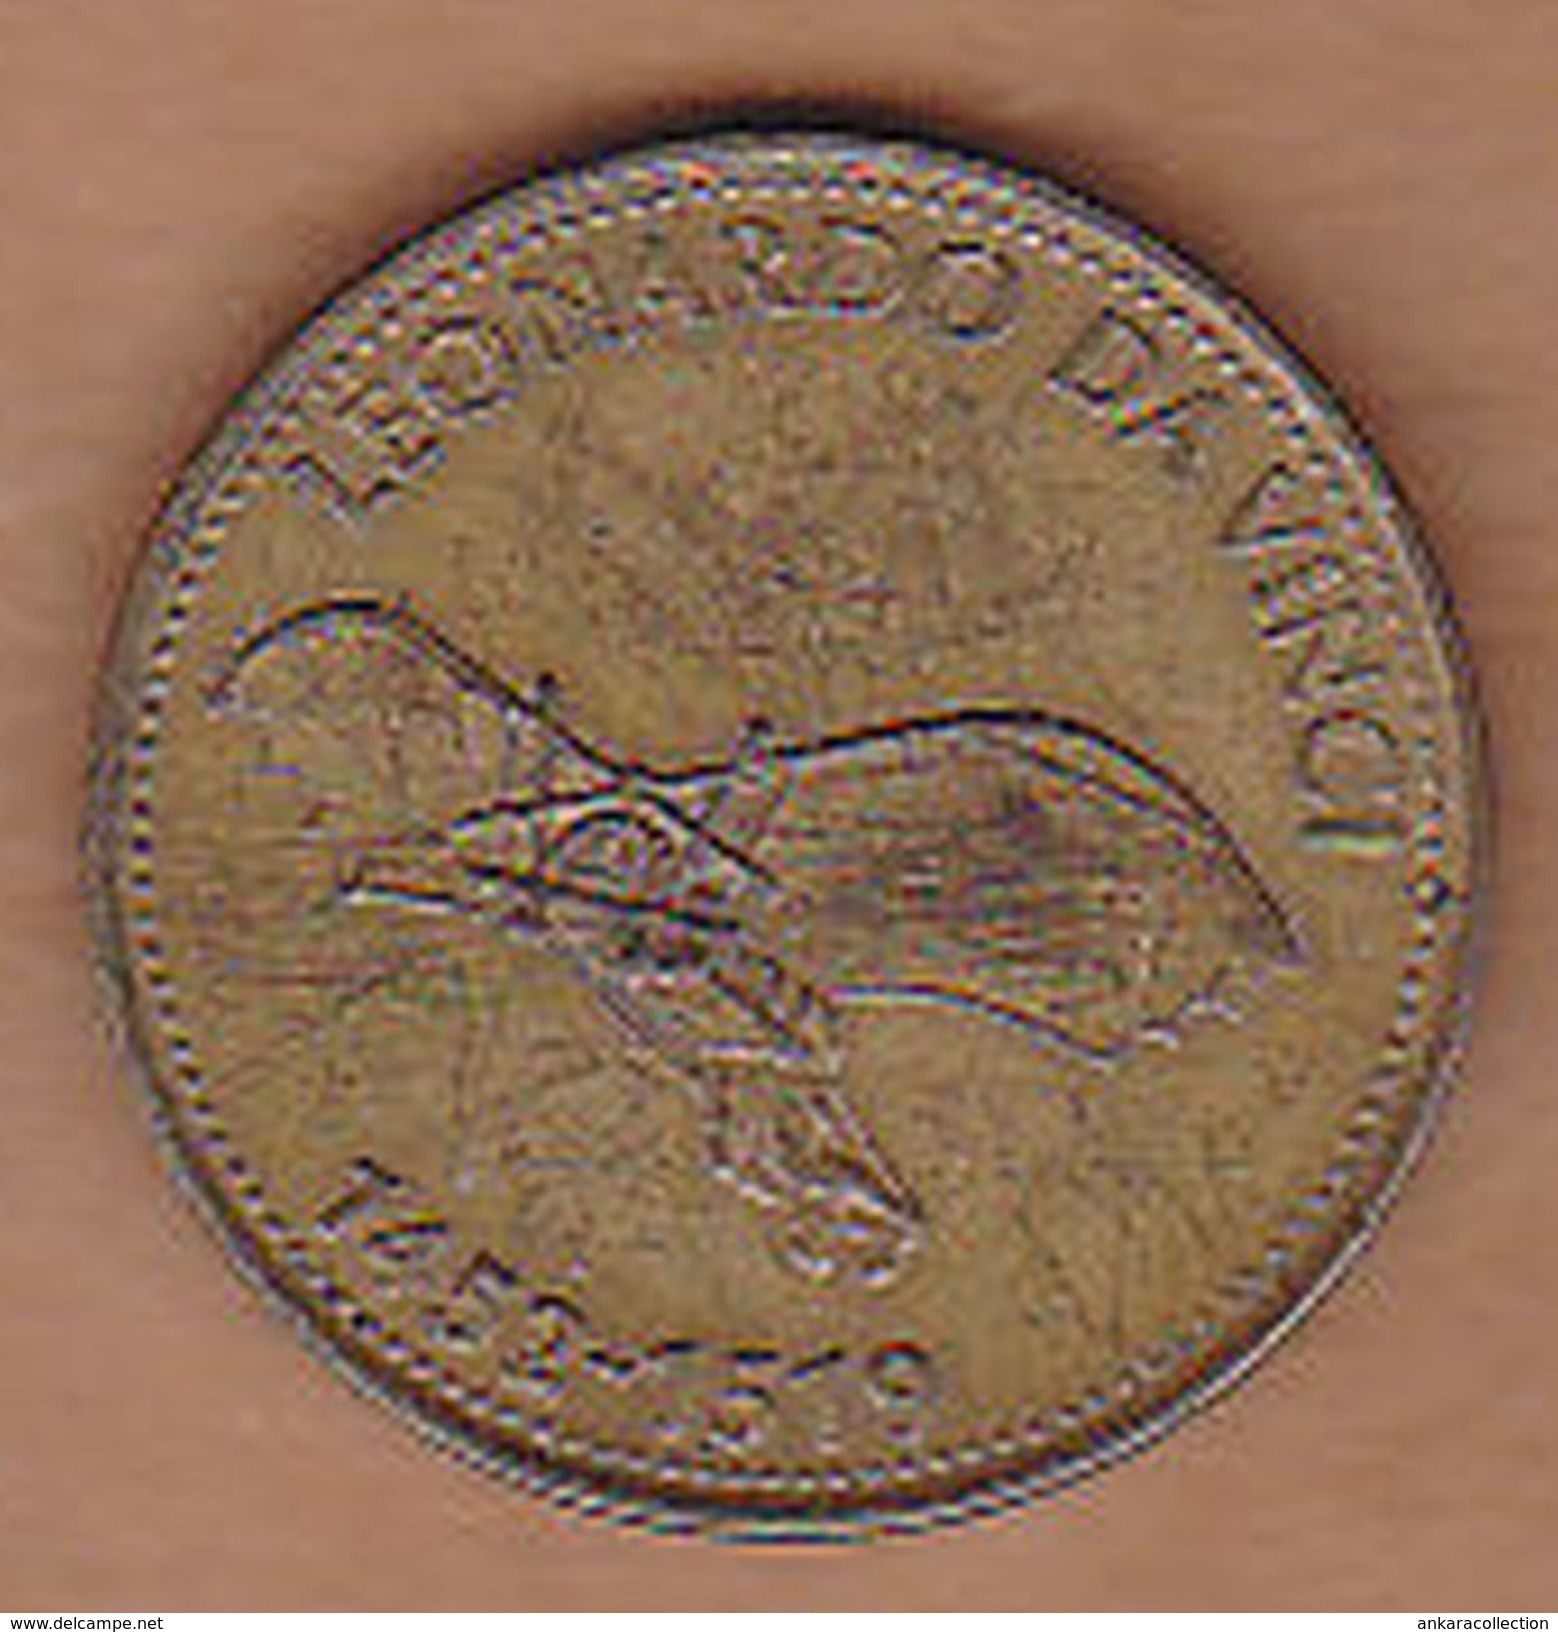 AC -  LEONARDO DA VINCI 1452 - 1519 SHELL TOKEN - JETON - Monétaires / De Nécessité